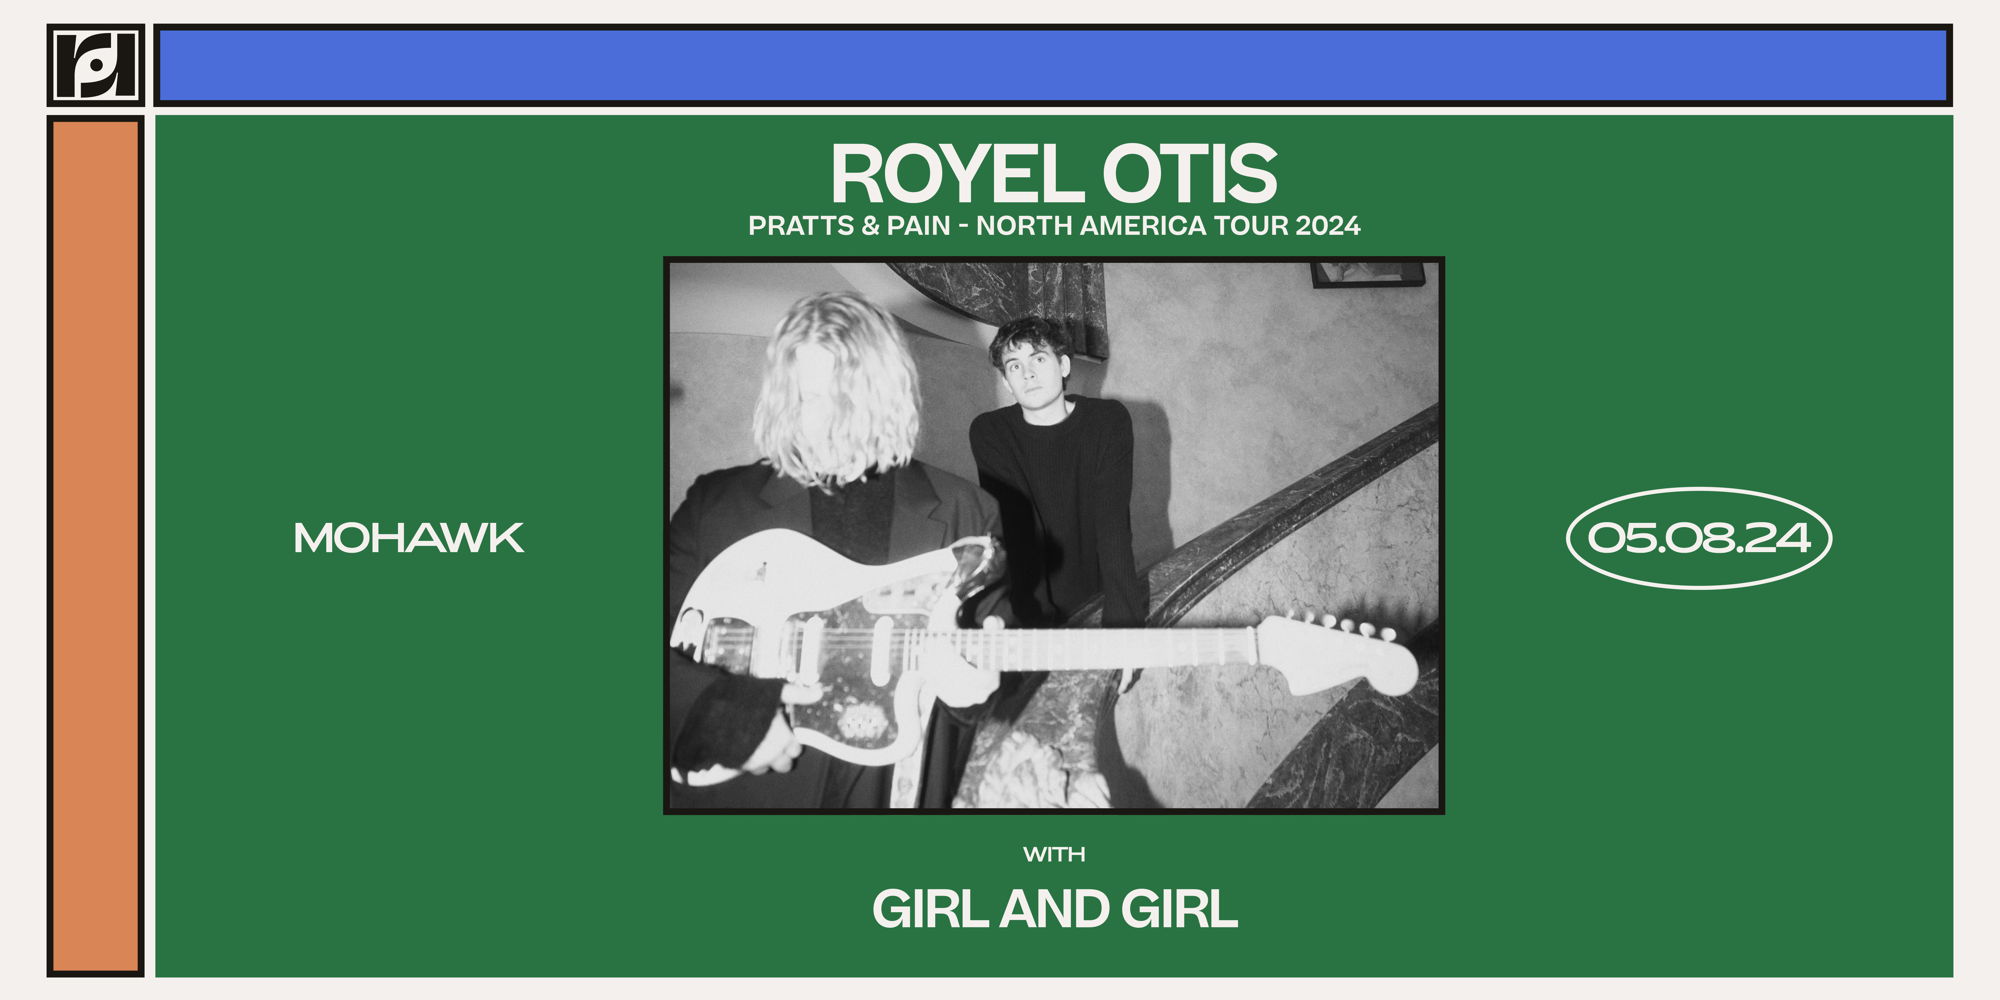 Royel Otis - PRATTS & PAIN - North America Tour 2024 w/ Girl and Girl promotional image